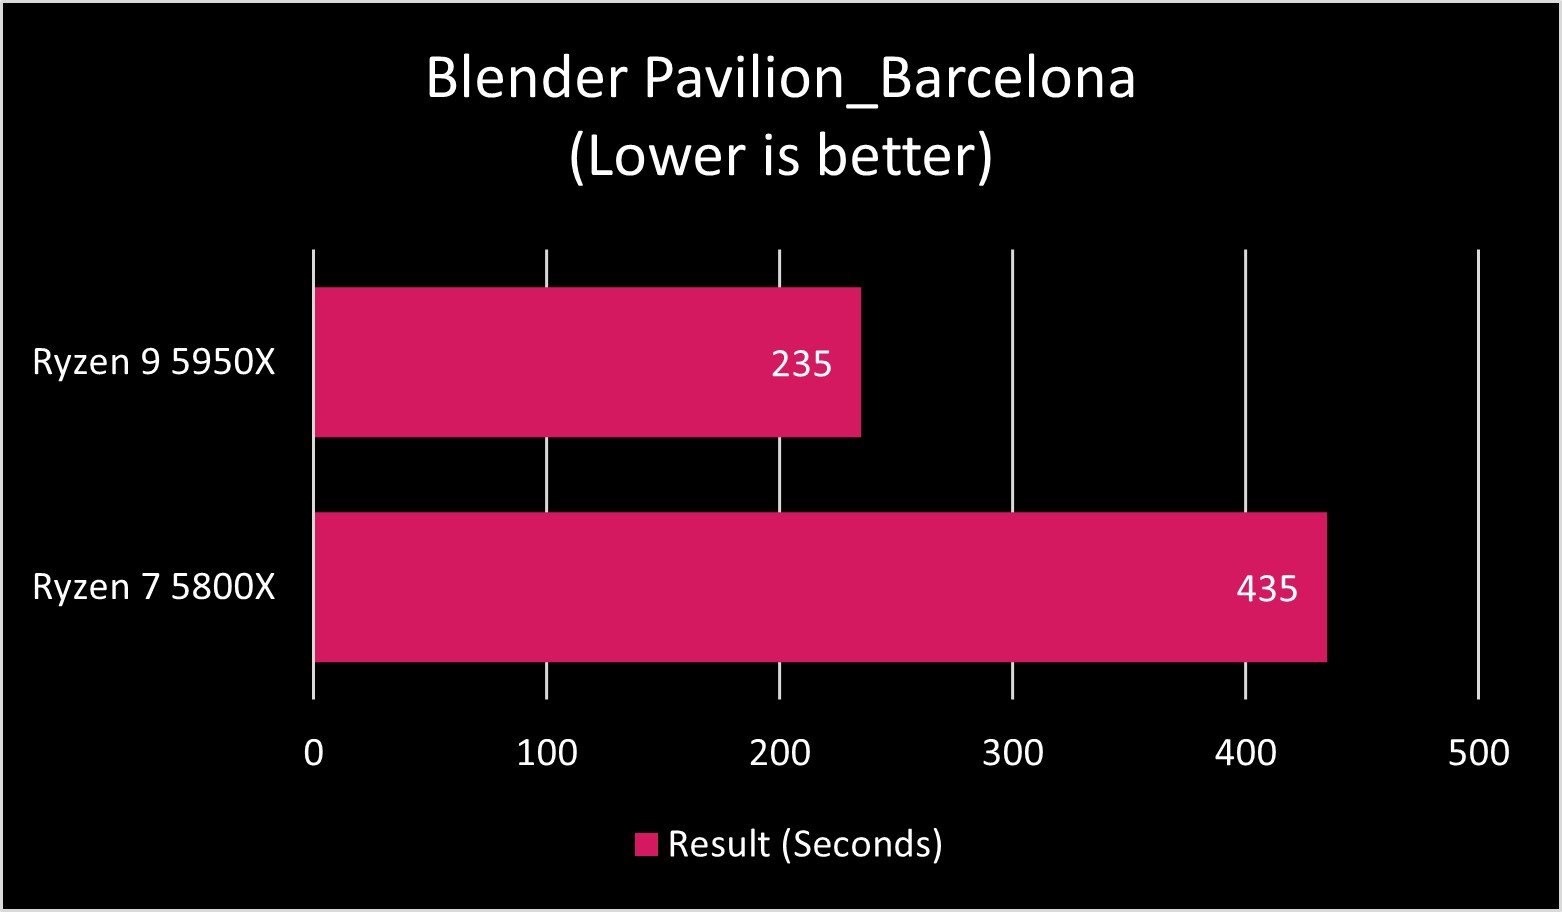 Ryzen 9 5950X Blender Pavilion Barcelona Benchmark